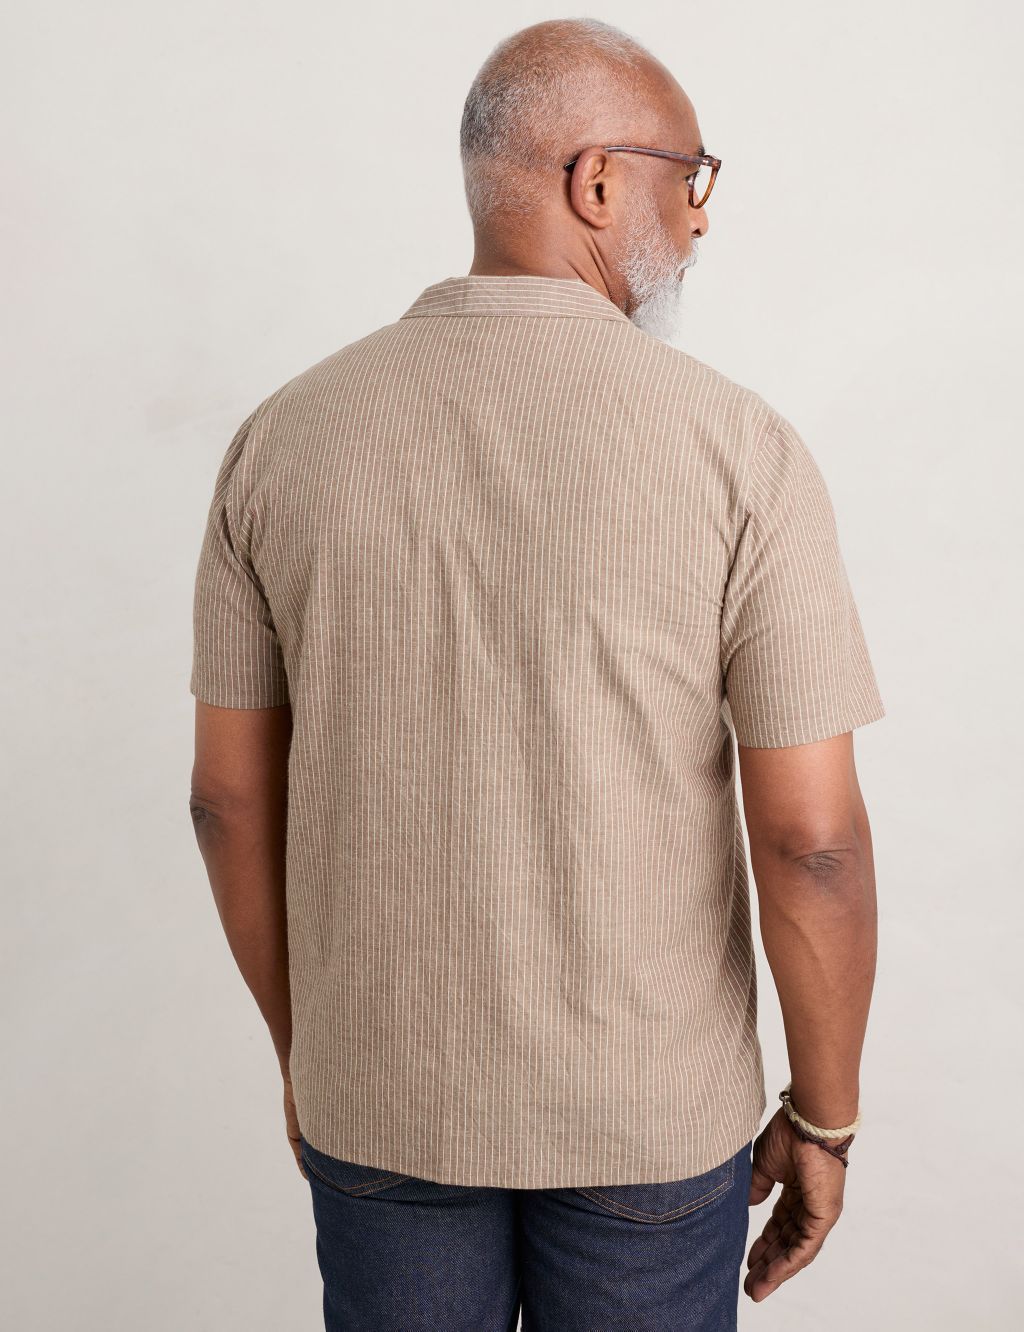 Cotton Rich Striped Shirt image 3